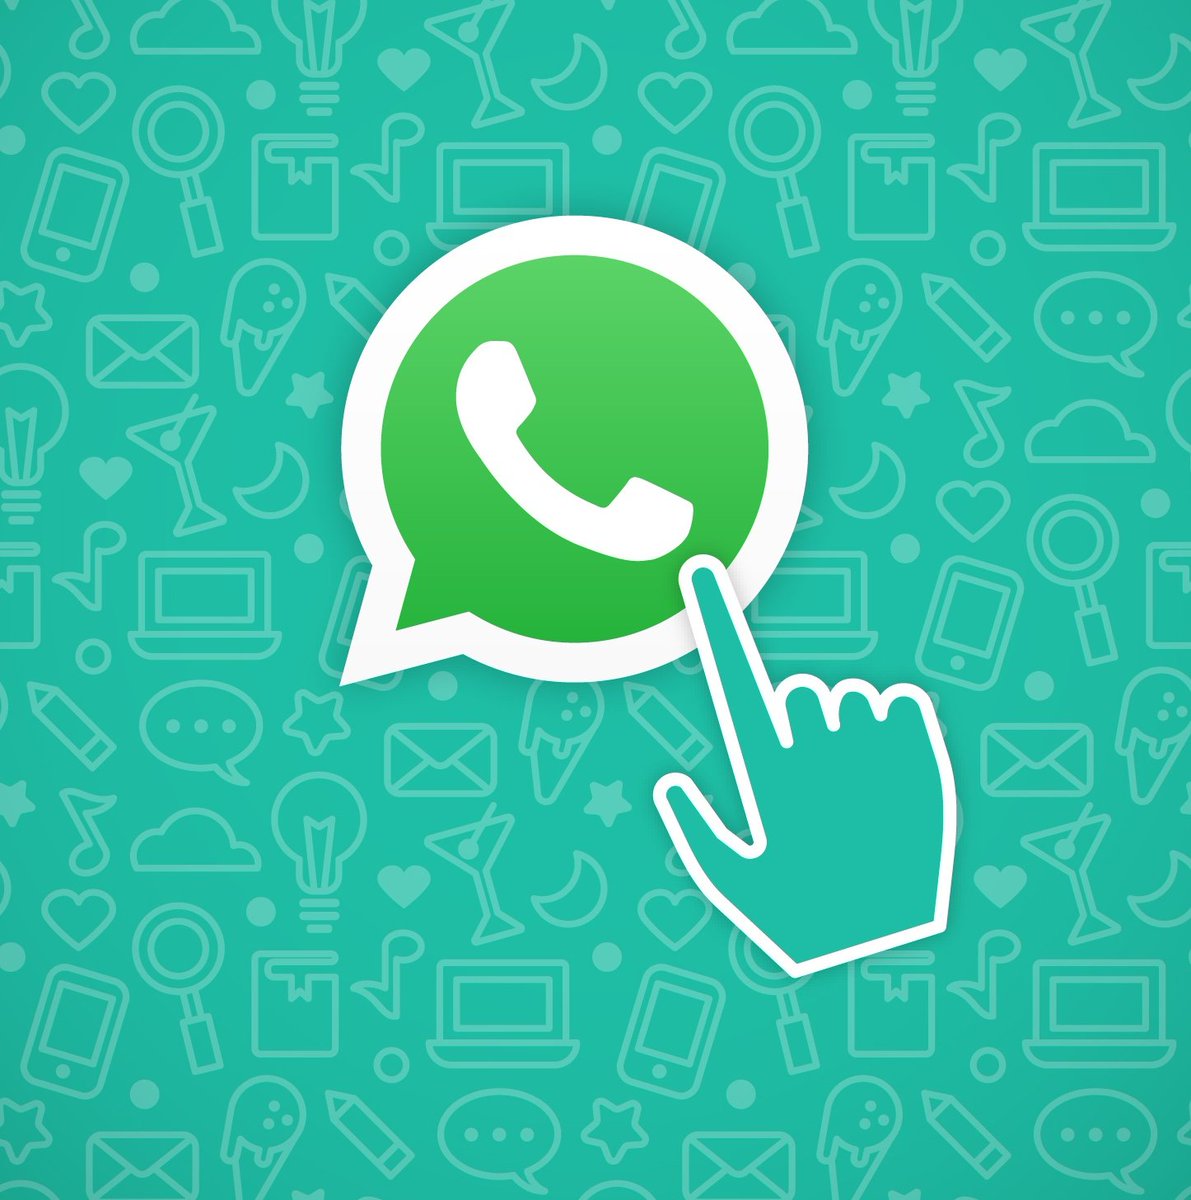 Follow the New Vision channel on WhatsApp : whatsapp.com/channel/0029Va…